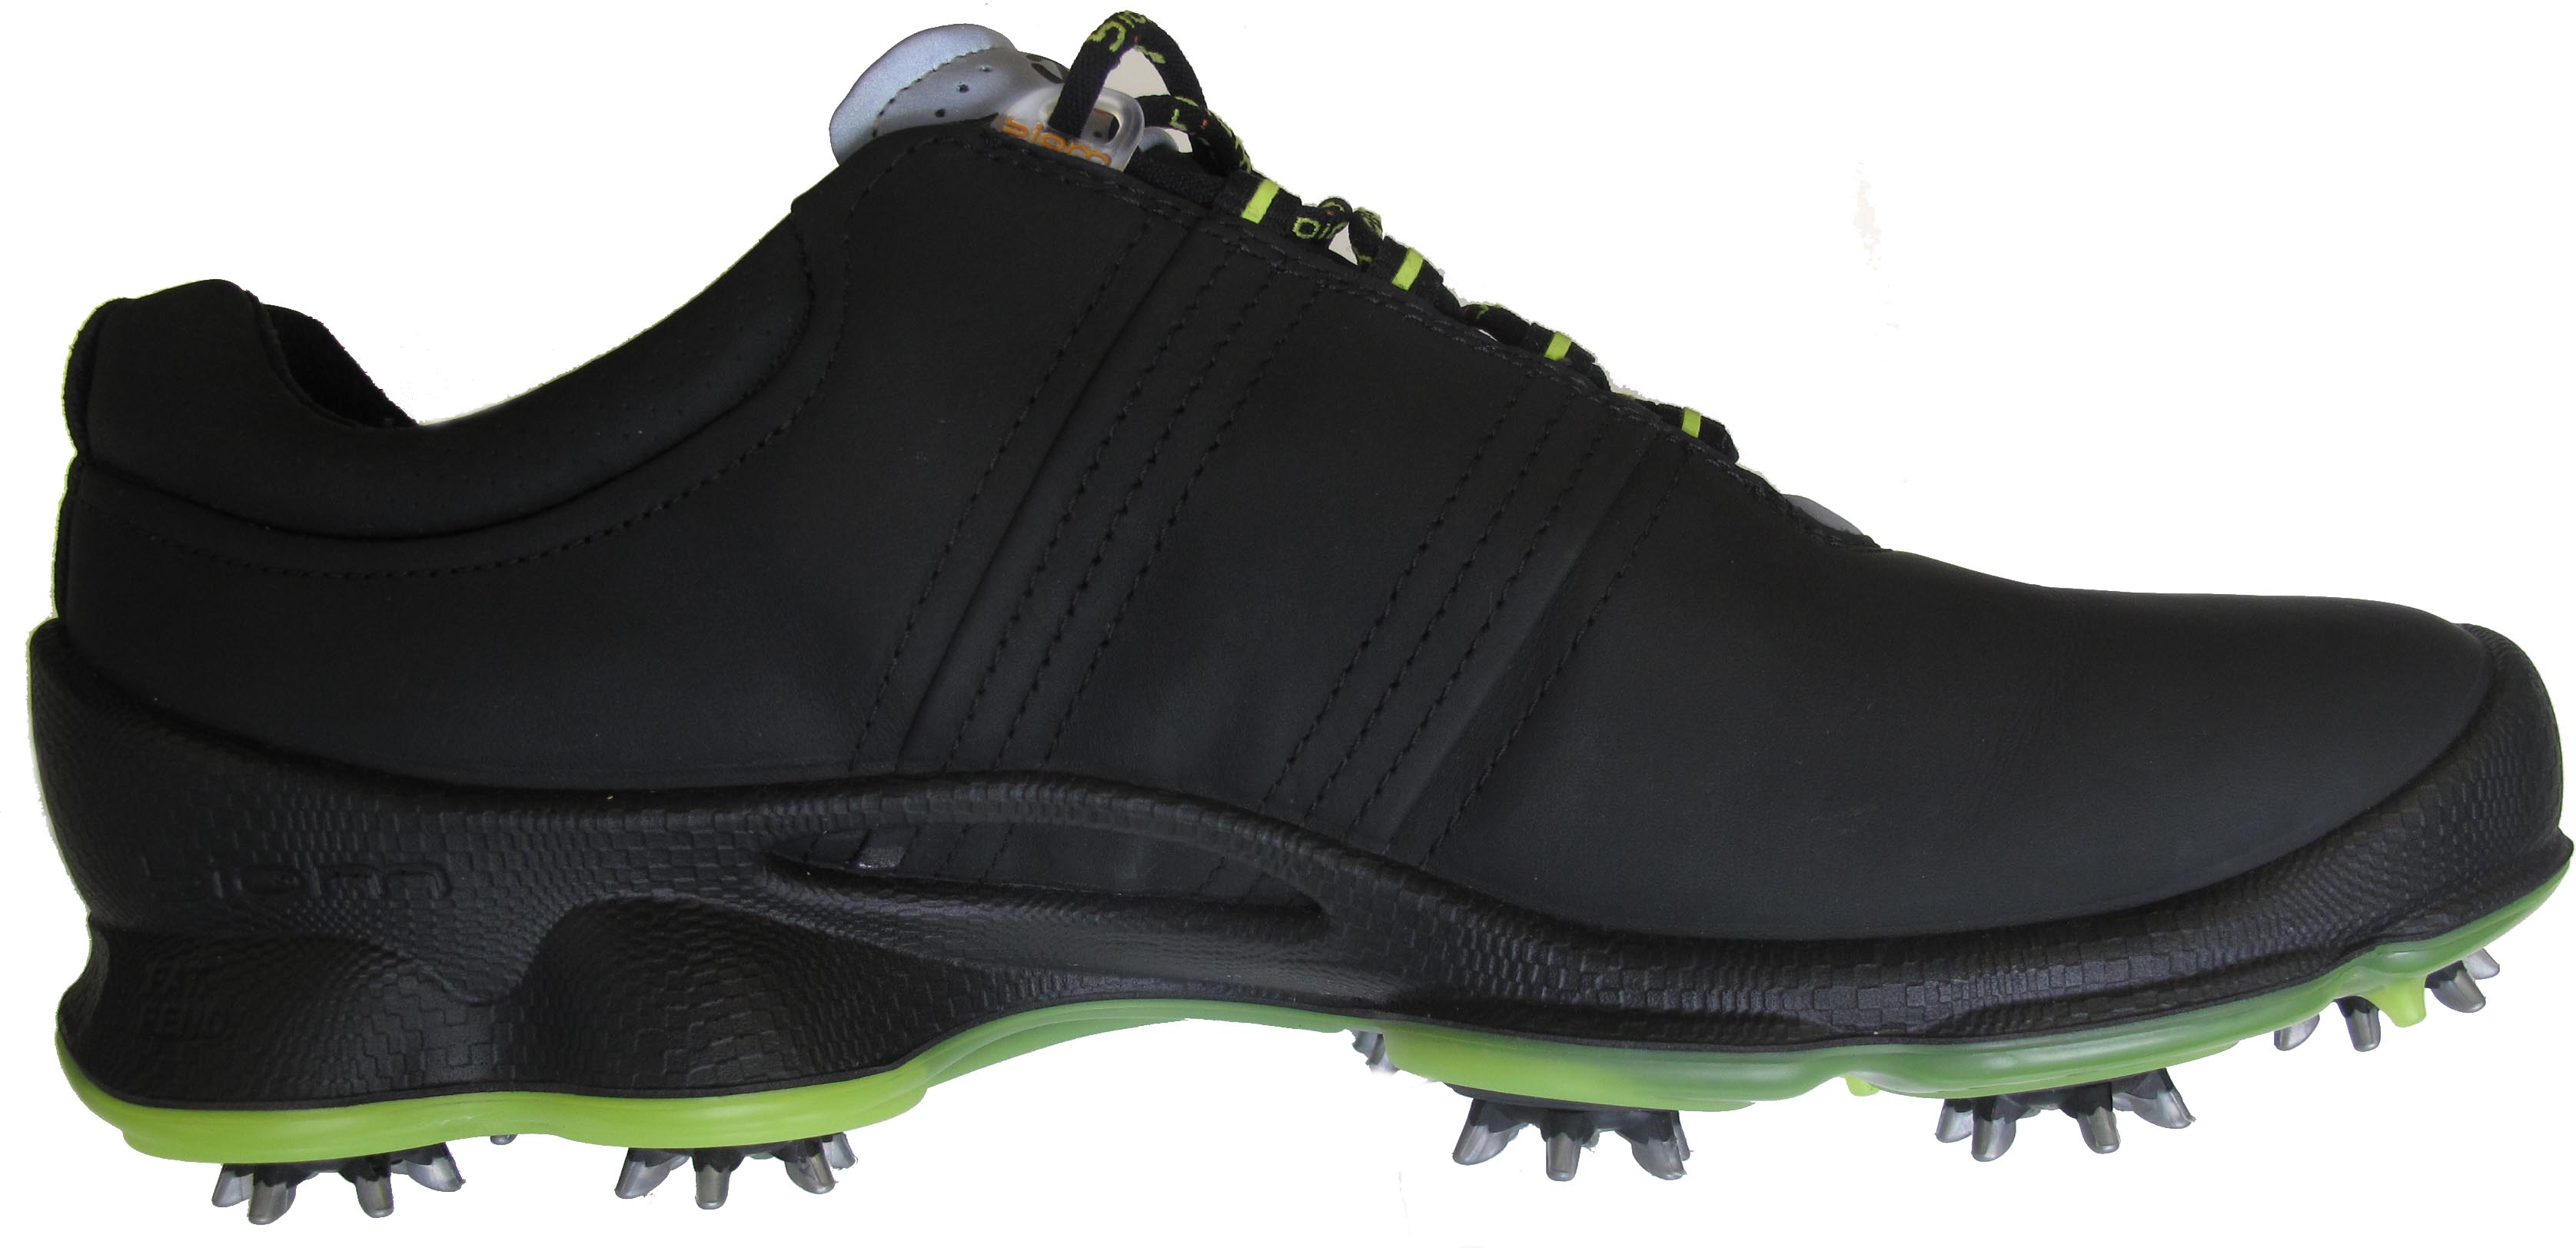 New: ECCO Biom Golf shoe